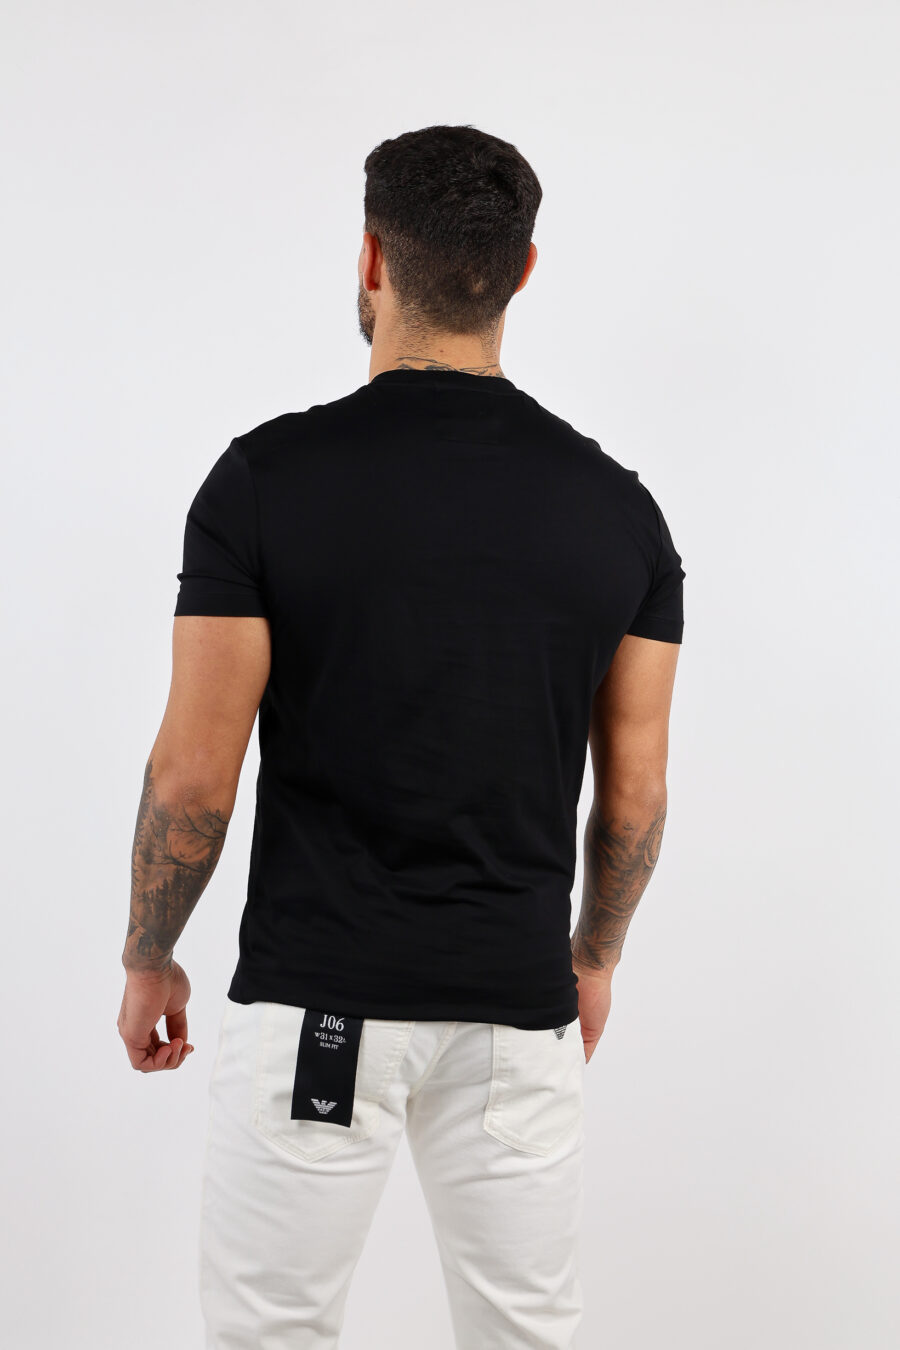 T-shirt preta com letras brancas maxilogo - BLS Fashion 90